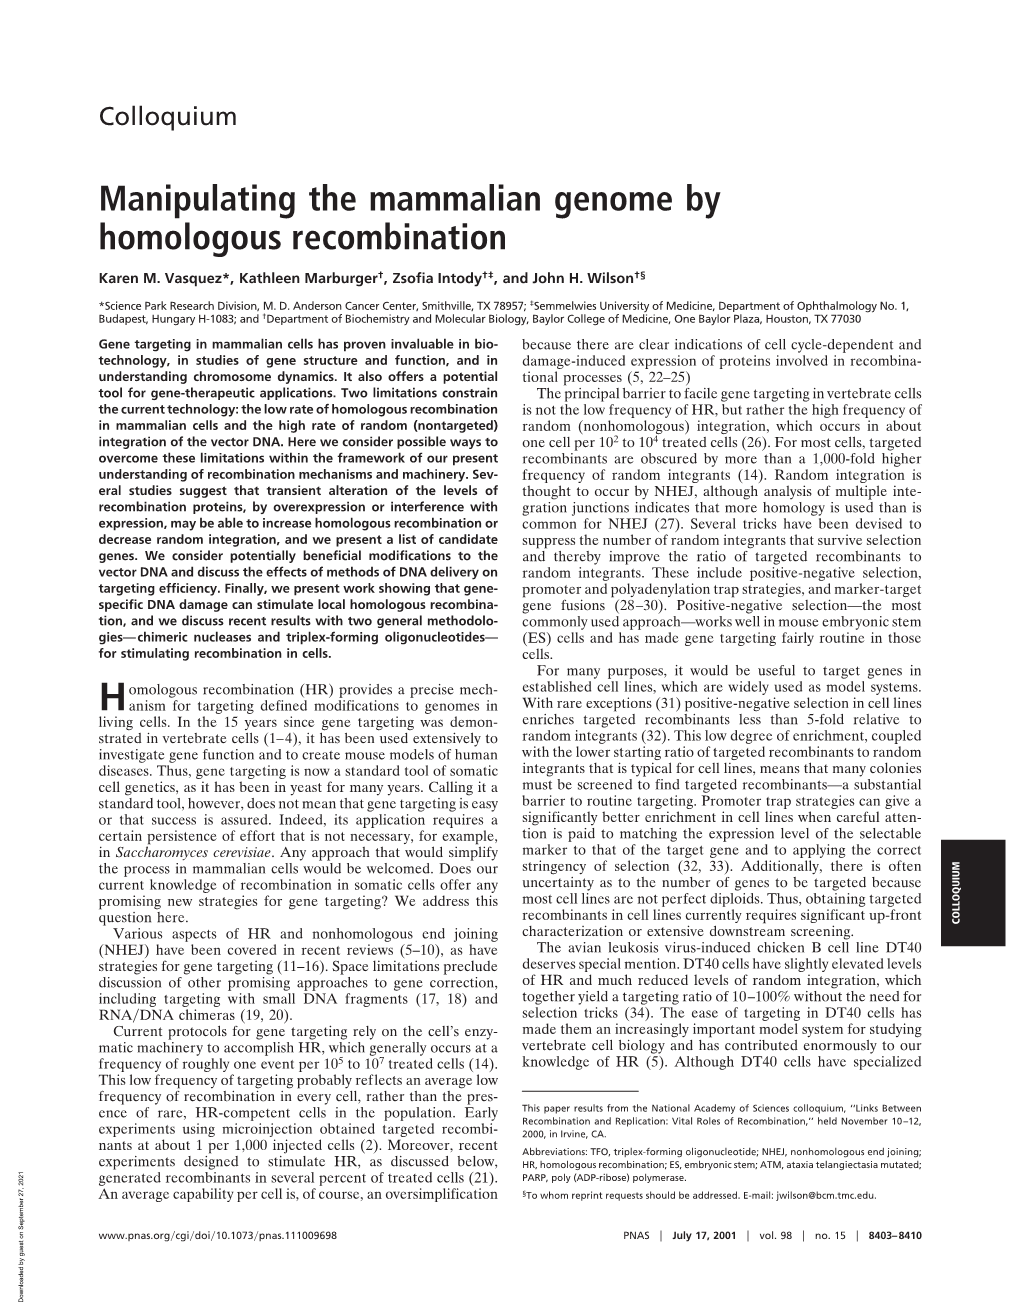 Manipulating the Mammalian Genome by Homologous Recombination